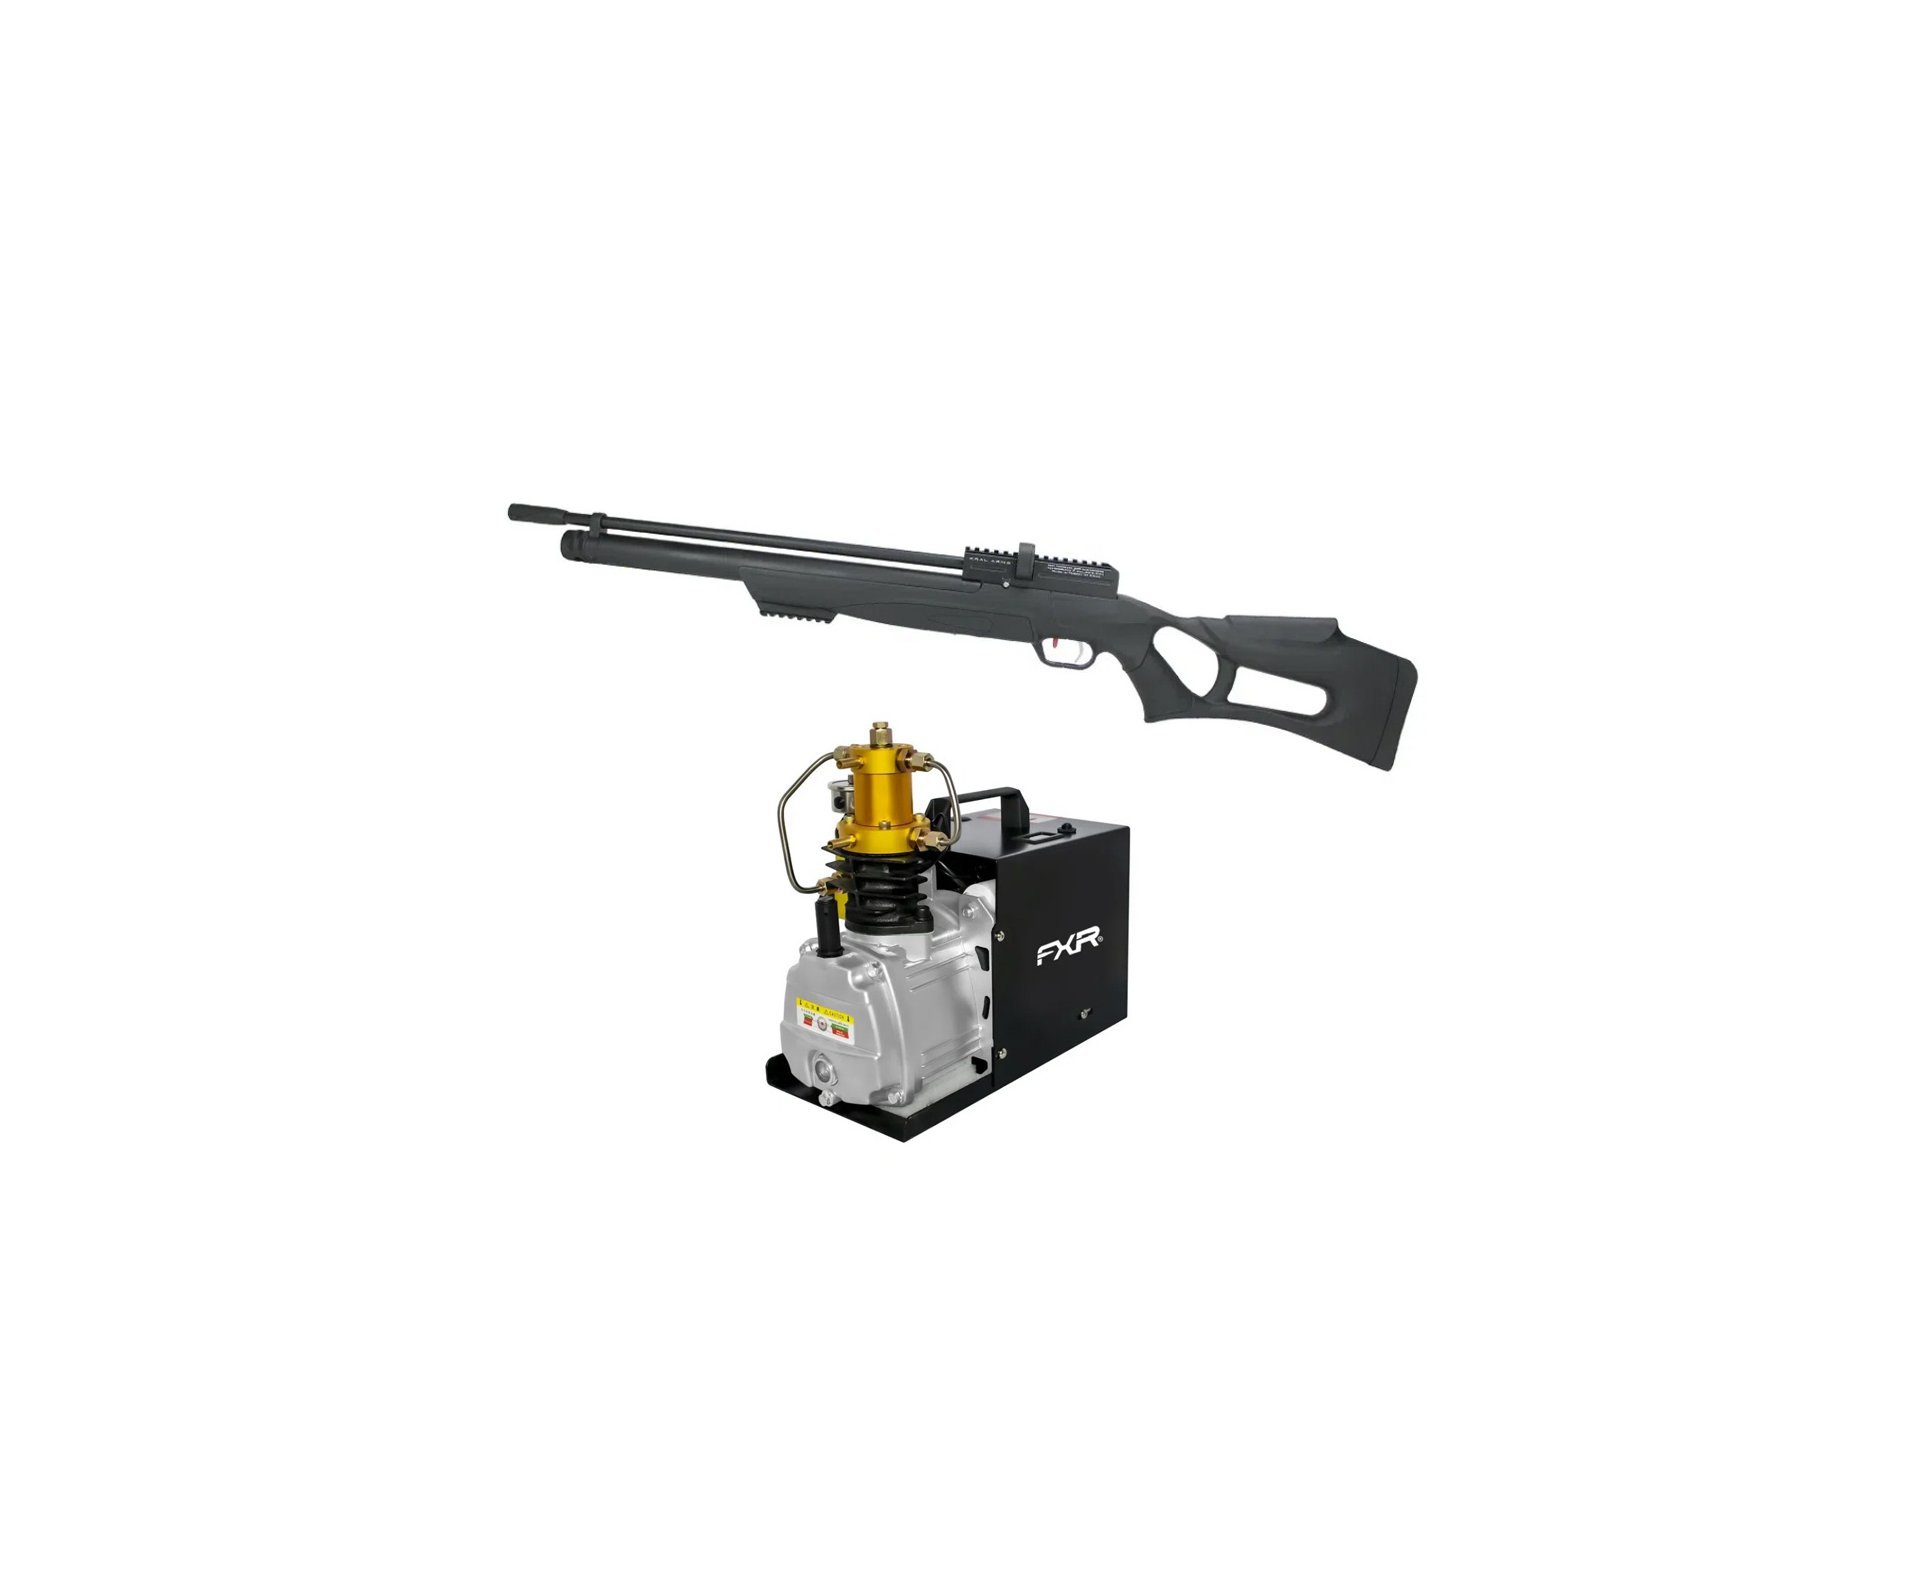 Carabina de Pressão PCP Kral Puncher Nish Sinthetic 6.35mm - FXR + Compressor para PCP e Cilindros de Scuba até 4500PSI 300Bar 30MPA 110V - FXR Arms